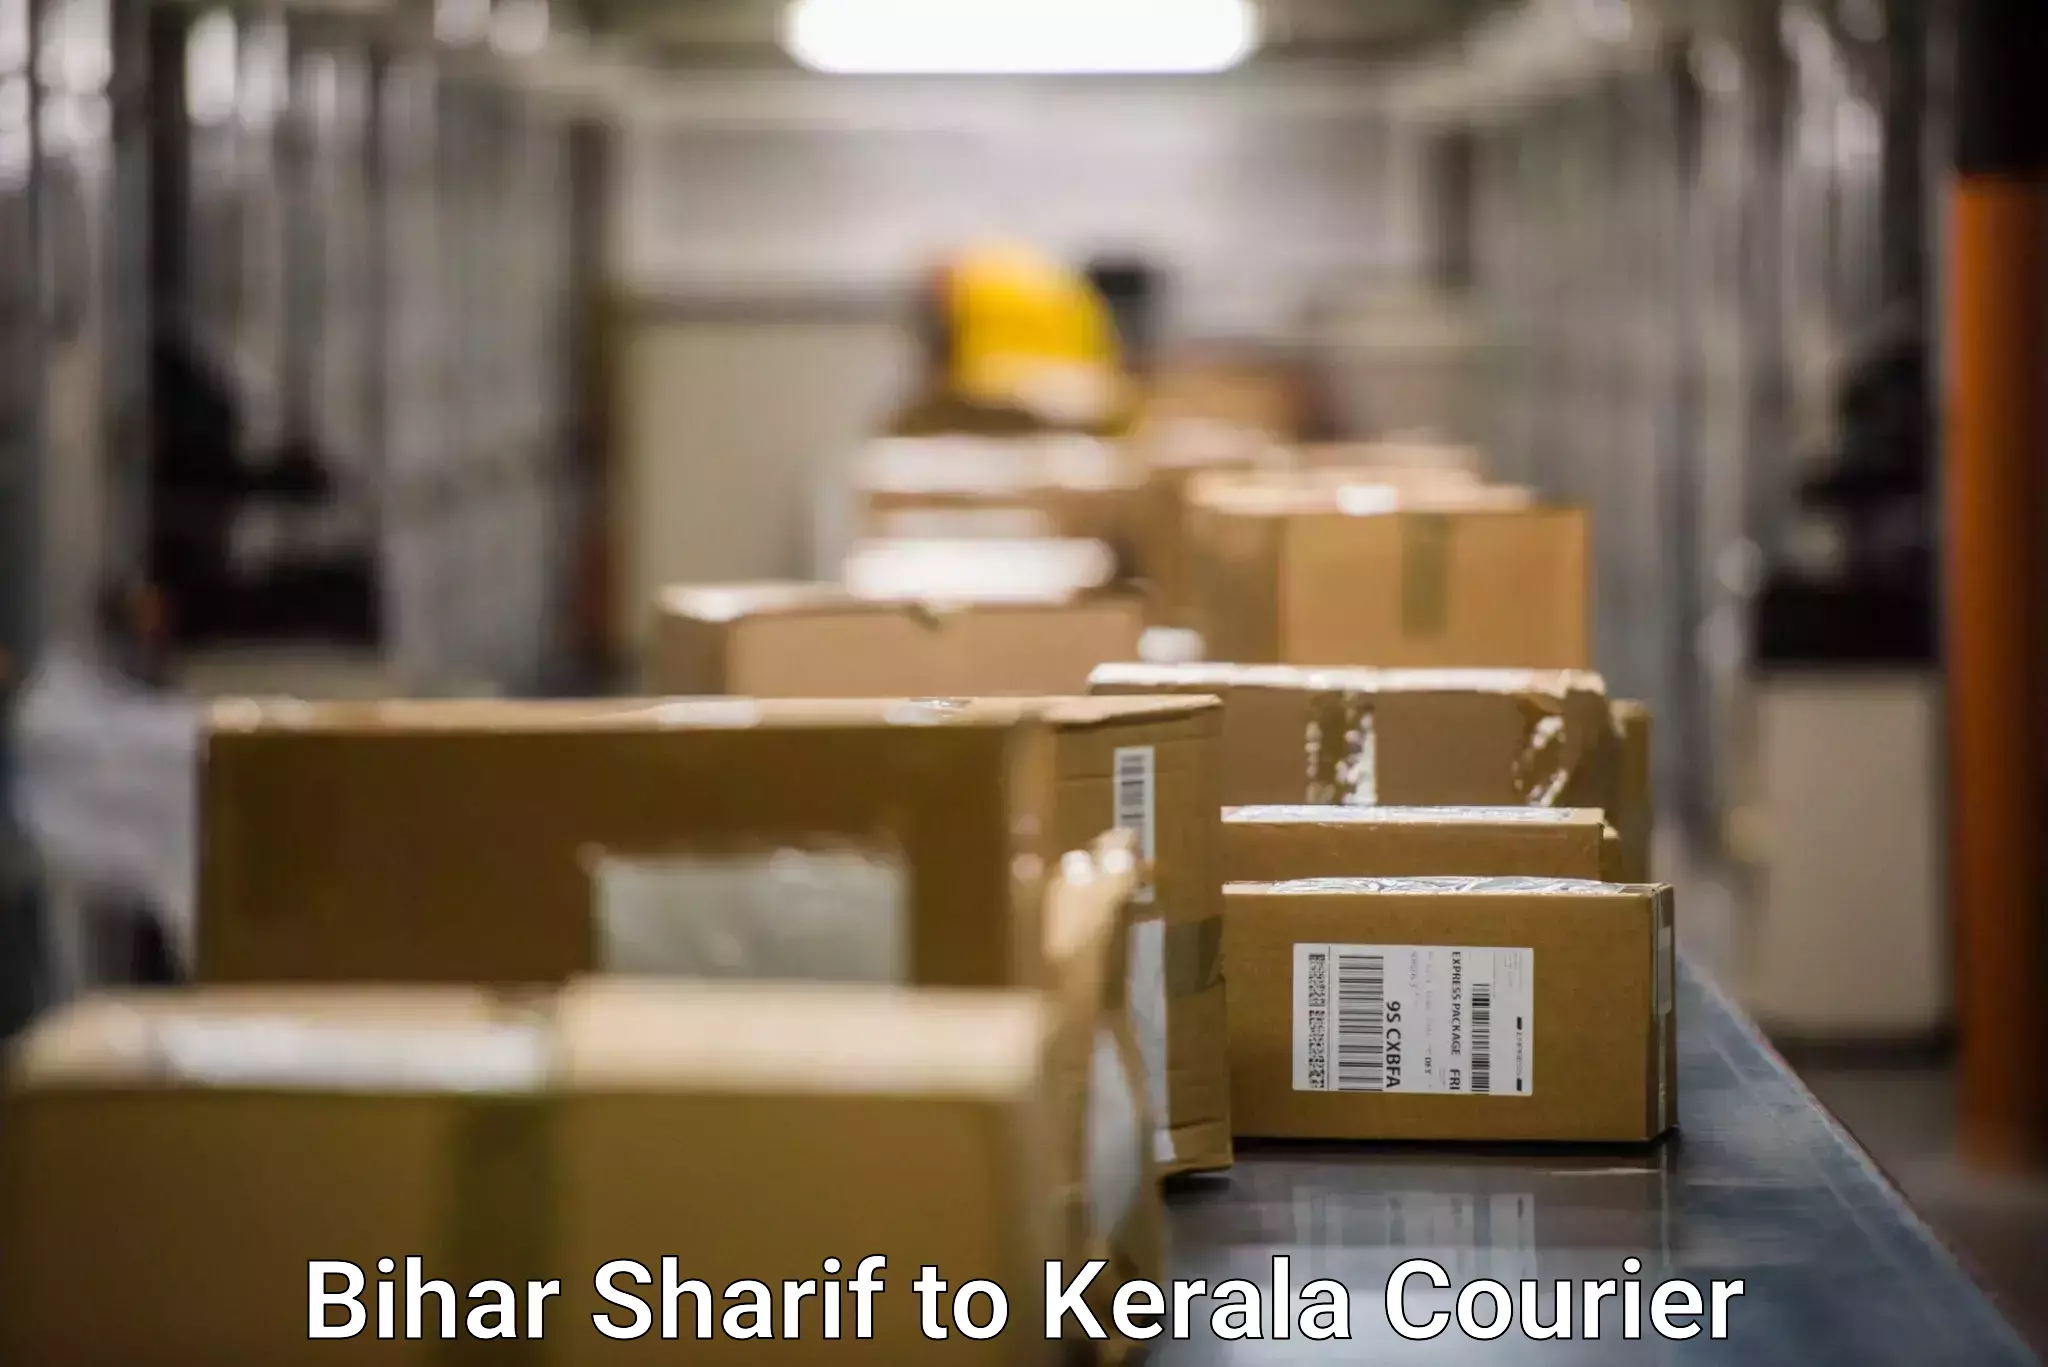 Courier service efficiency Bihar Sharif to Thodupuzha